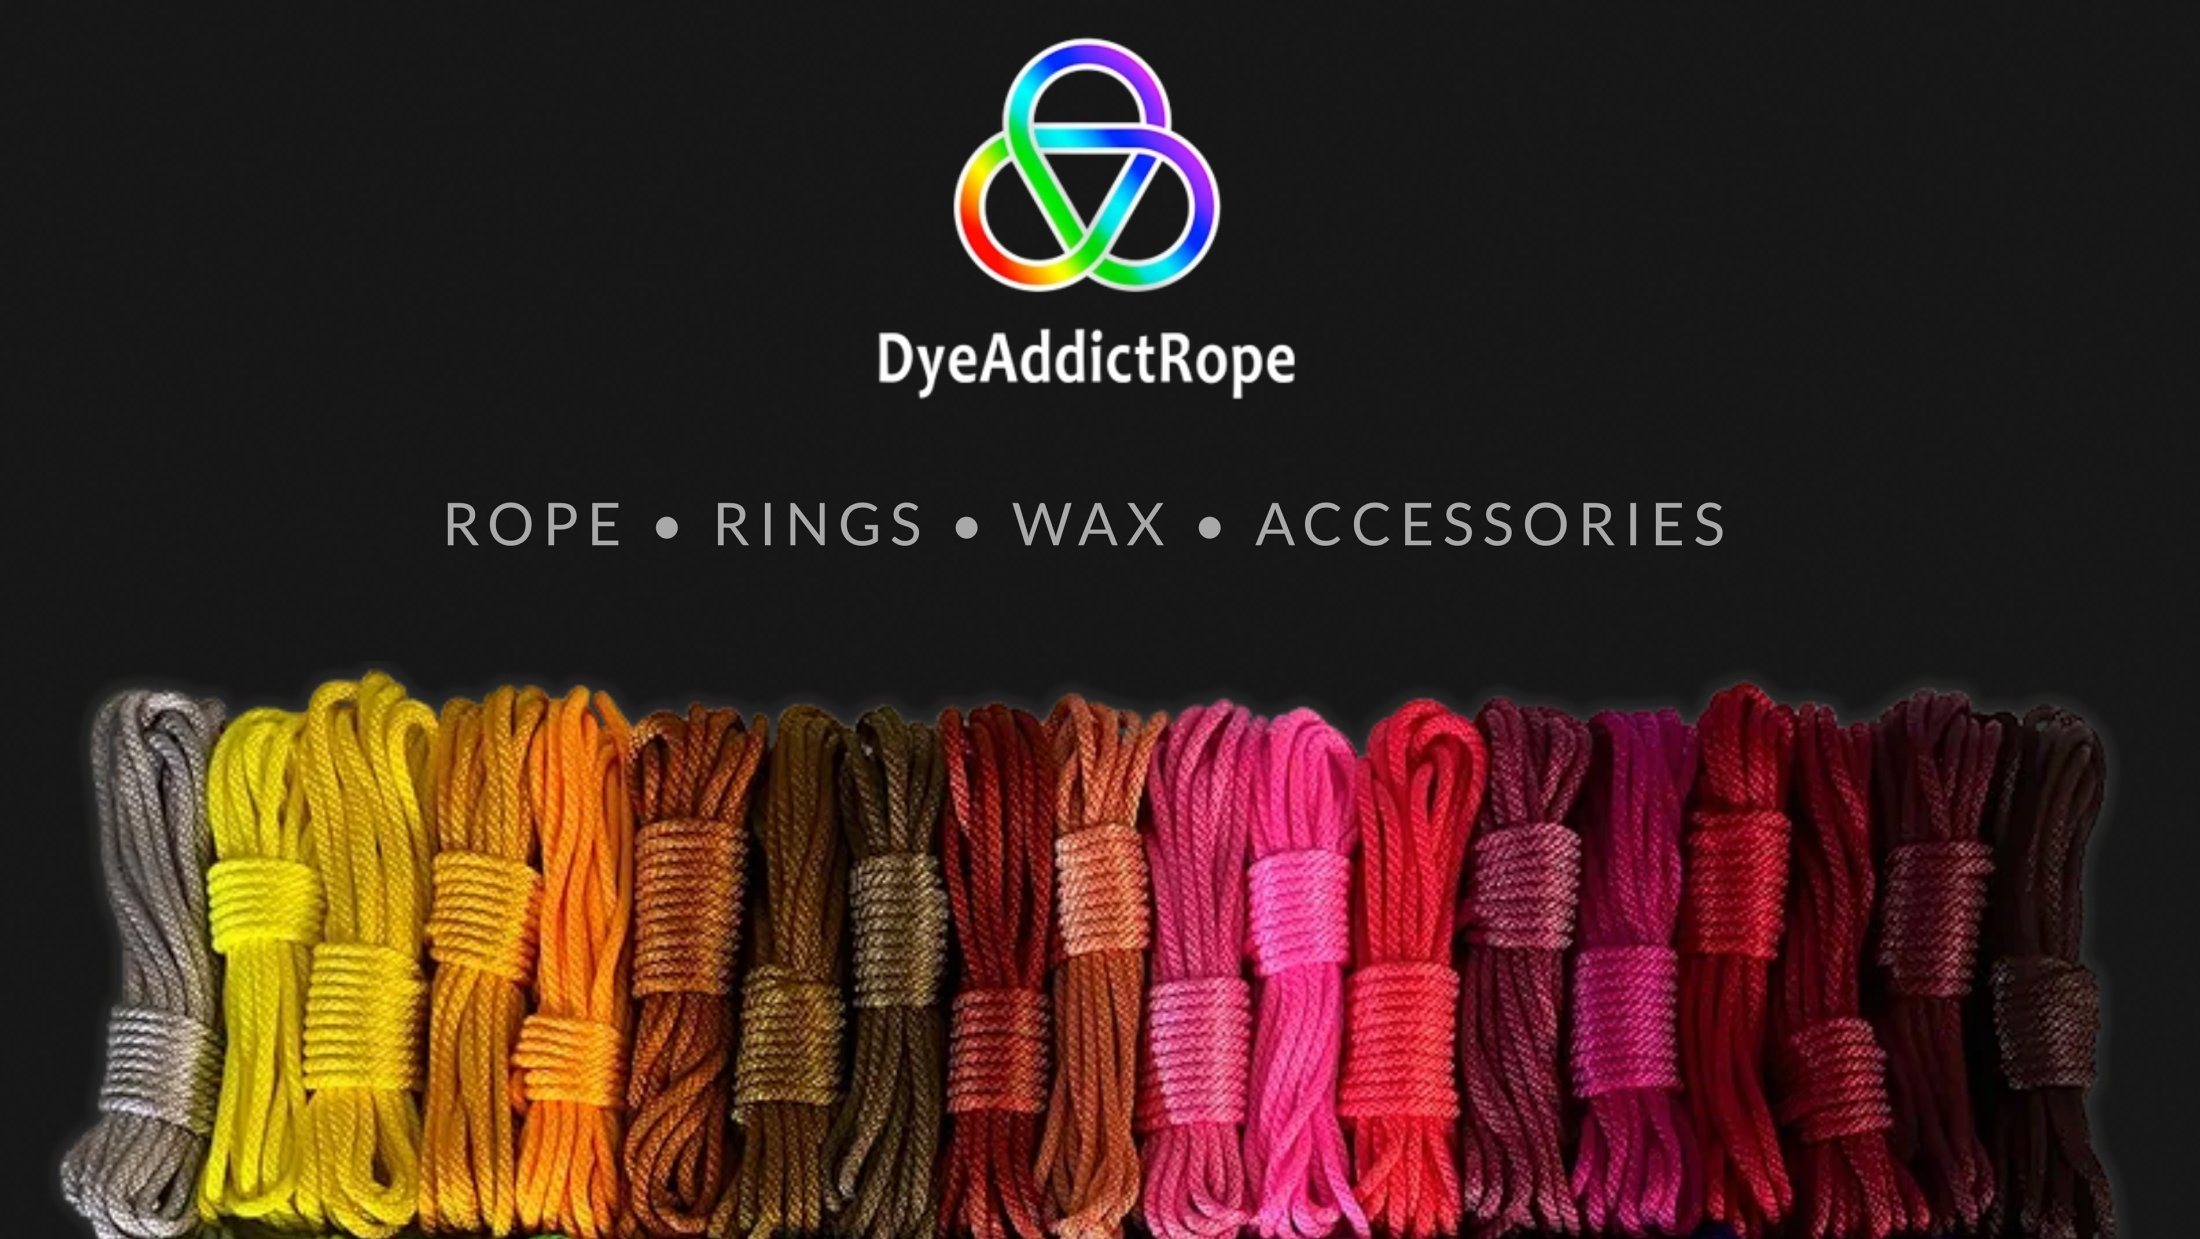 DyeAddictRope